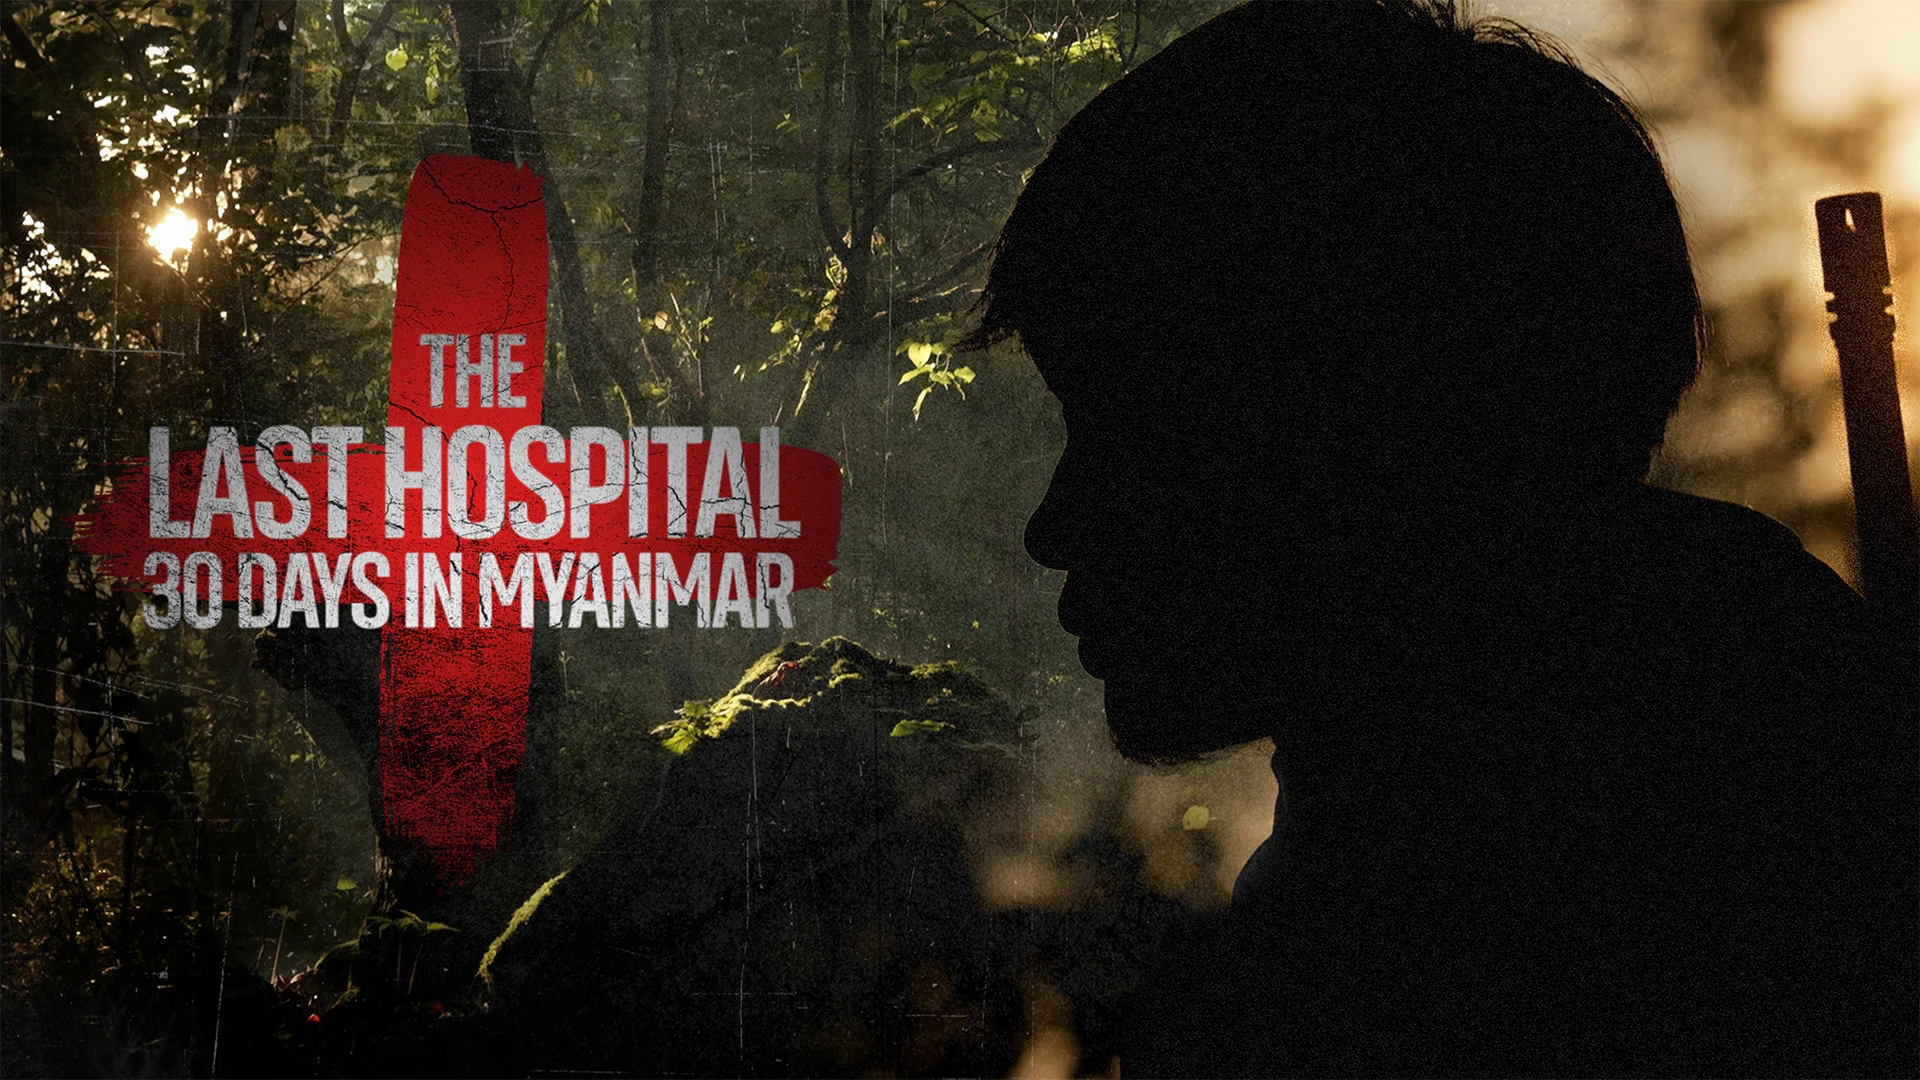 Sky News Documentaries: Myanmar, The Last Hospital: 30 Days in Myanmar with Stuart Ramsay